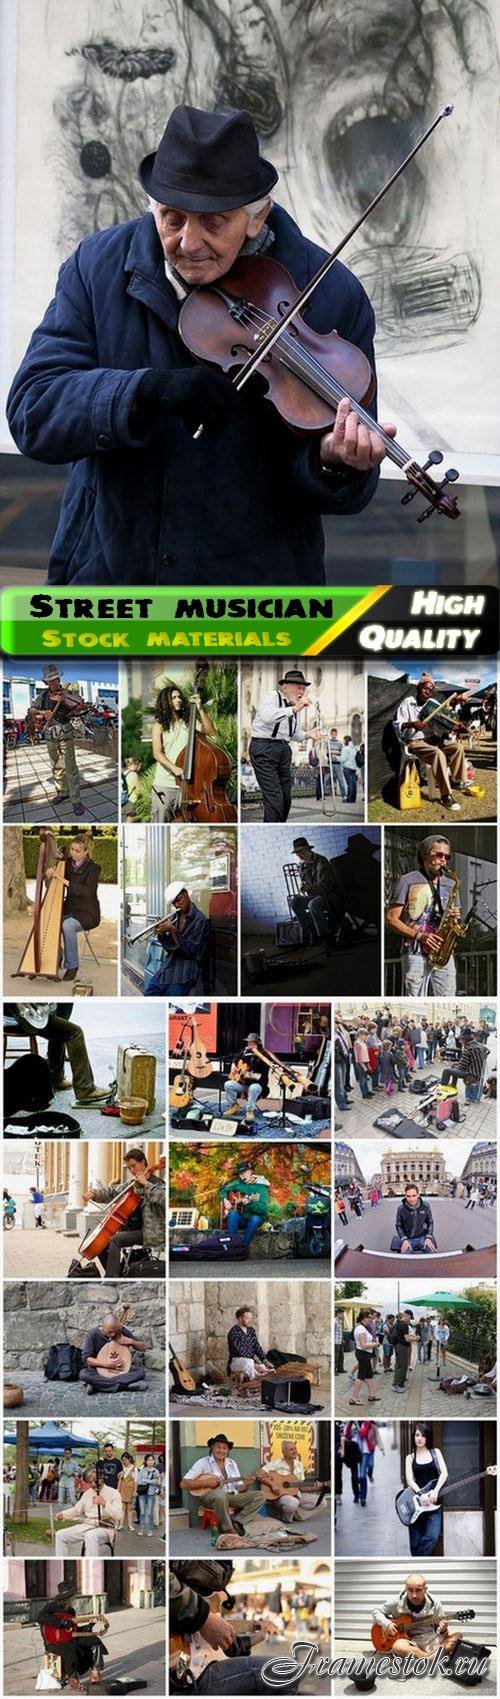 Urban street musician playing a musical instrument - 25 HQ Jpg